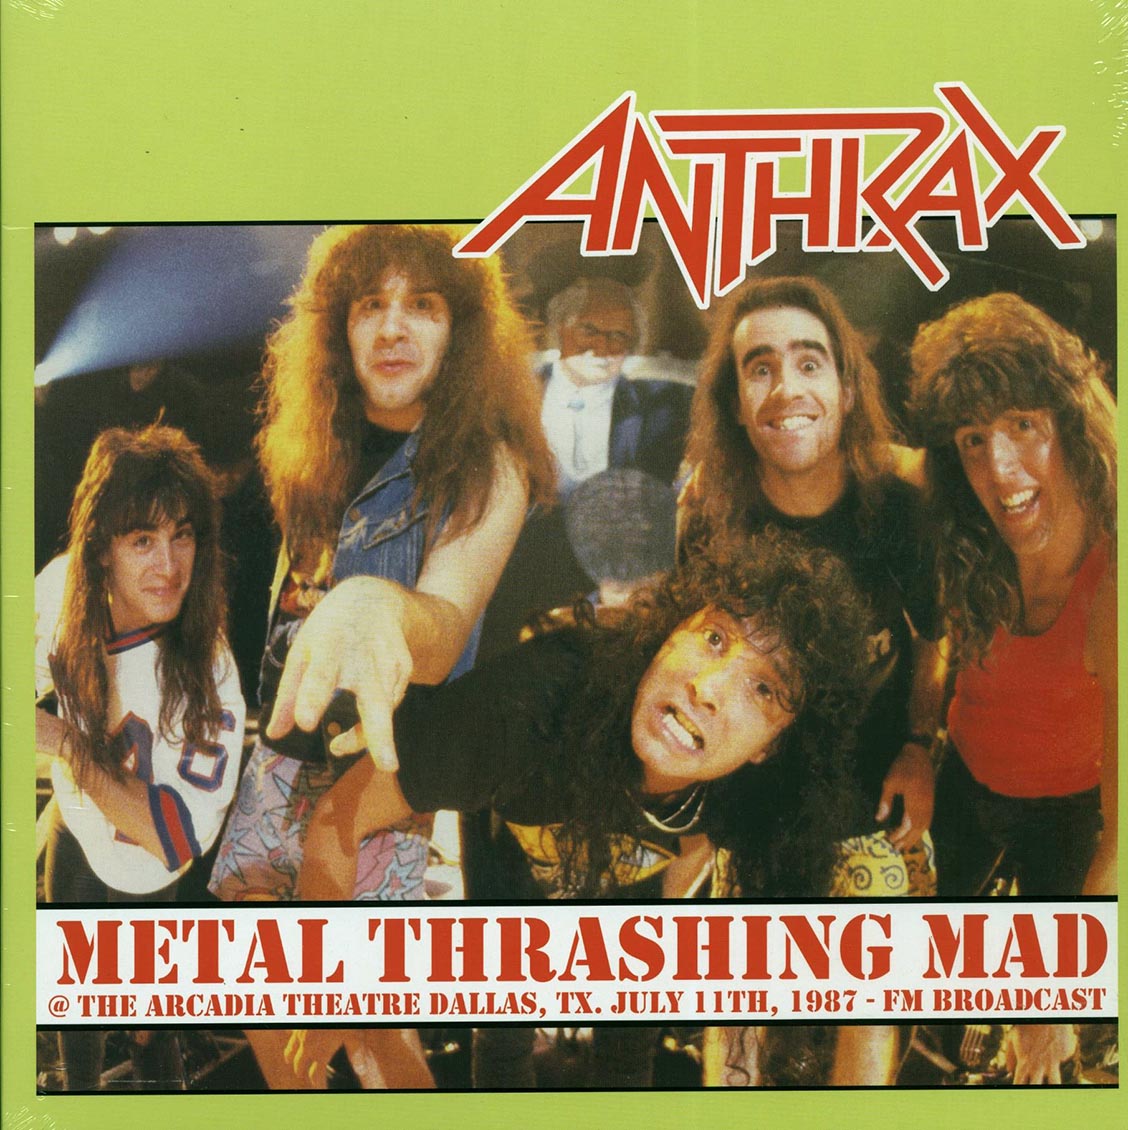 Anthrax - Metal Thrashing Mad: The Arcadia Theatre, Dallas, TX July 11th, 1987 FM Broadcast (ltd. 500 copies made) - Vinyl LP